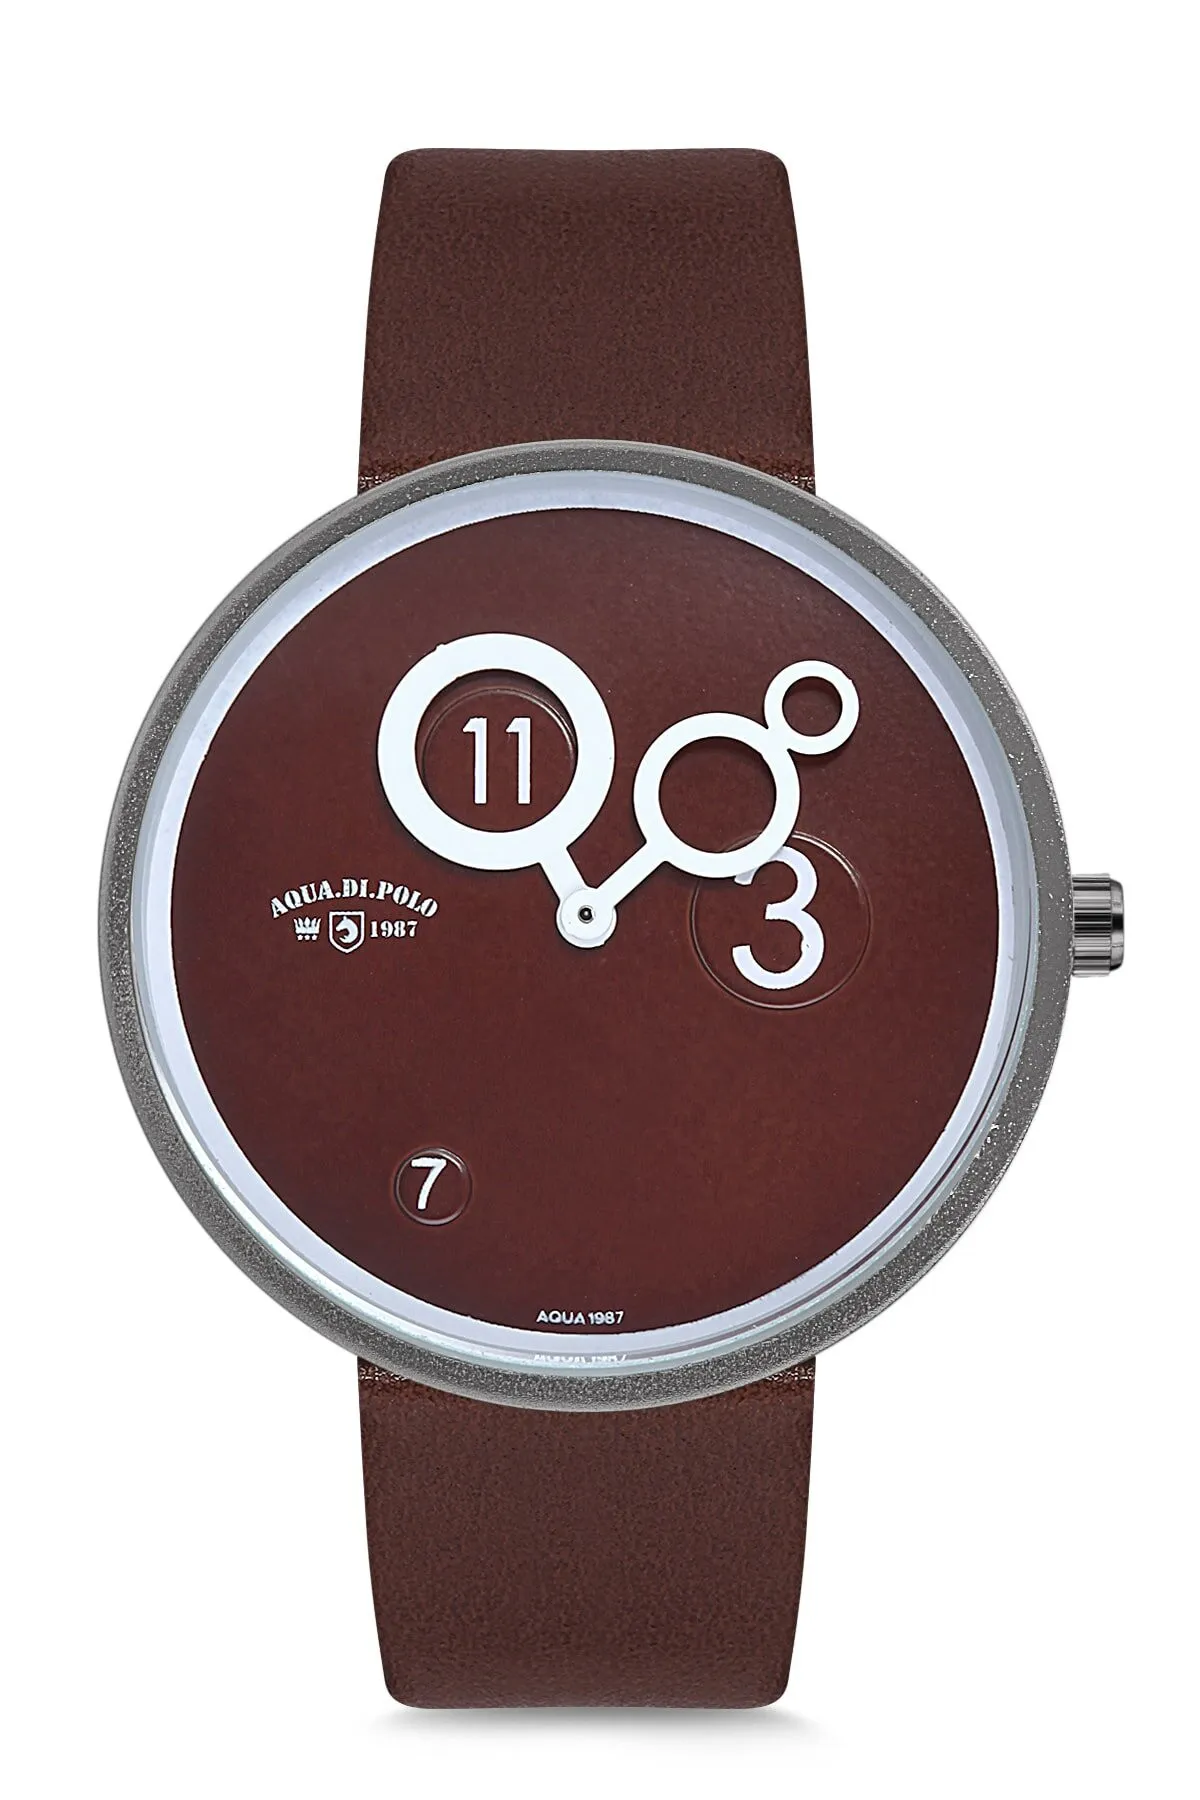 Кожаные наручные часы унисекс Di Polo apwa028504#1